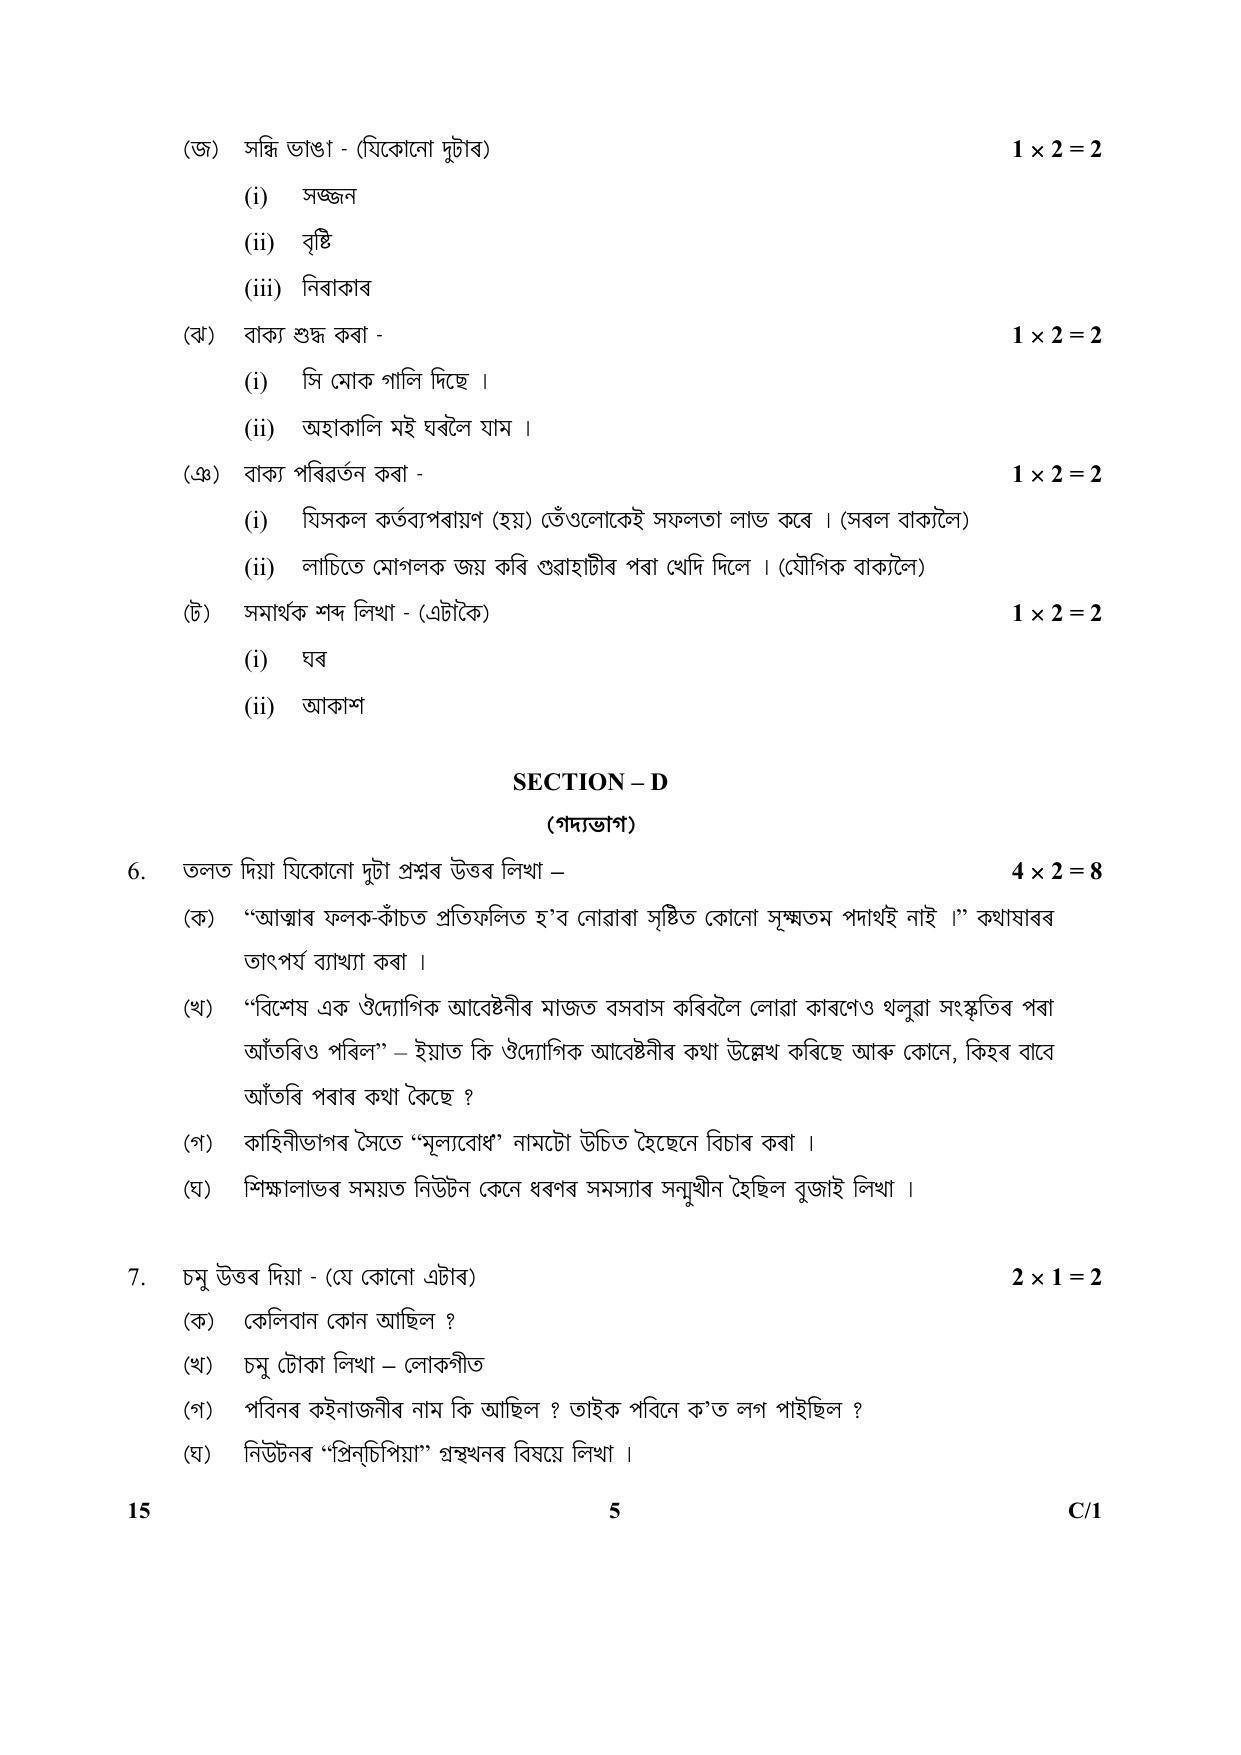 CBSE Class 10 15 (Assamese) 2018 Compartment Question Paper - Page 5